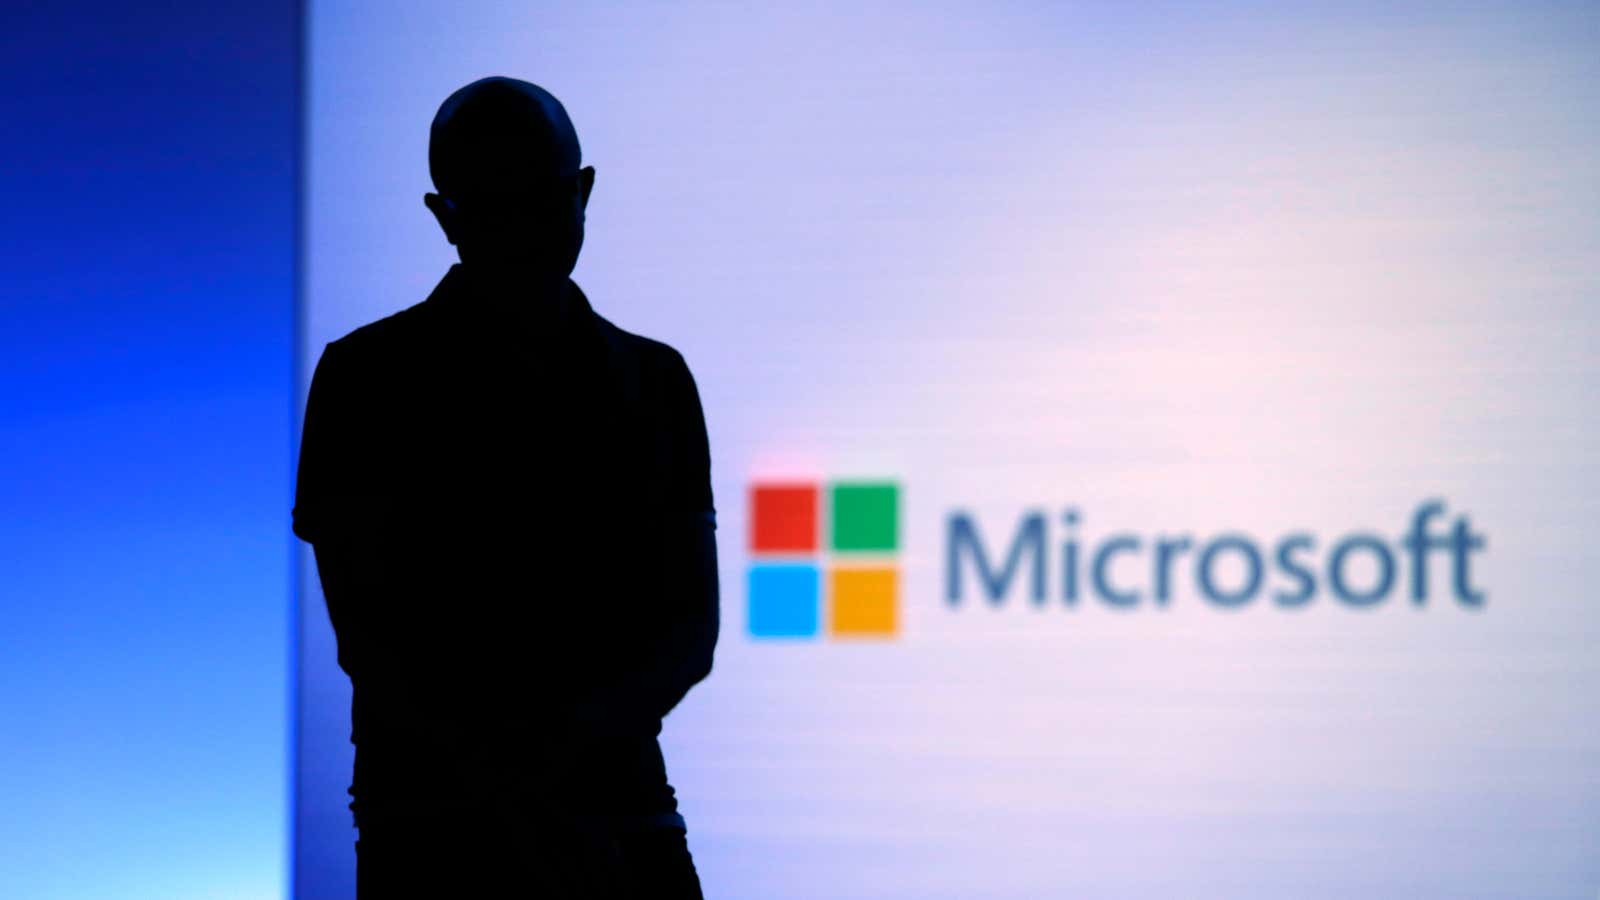 It’s a new dawn at Microsoft under Nadella.